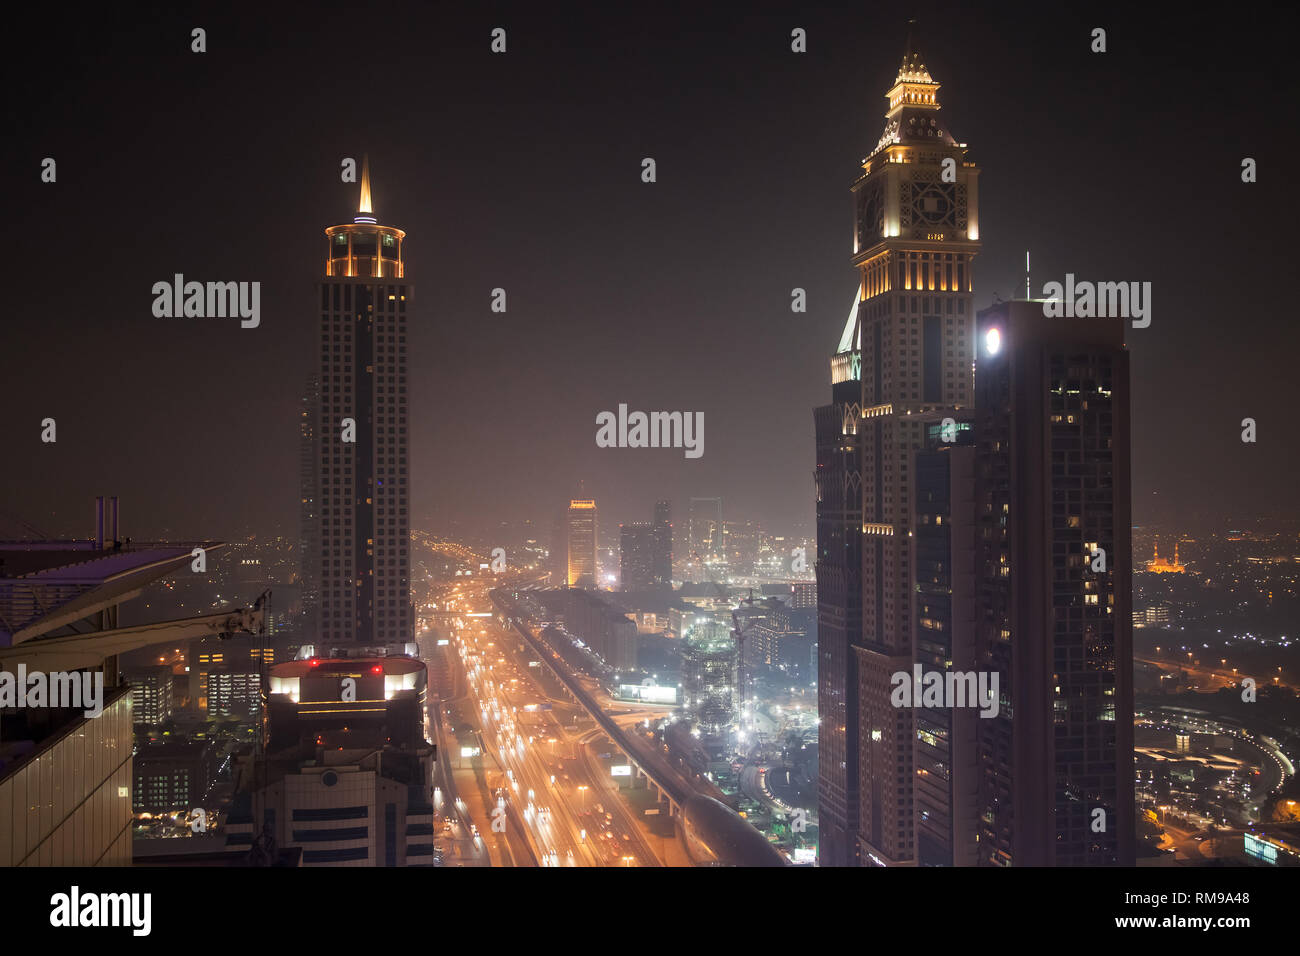 Sheikh Zayed Road at night, Dubai, United Arab Emirates. Stock Photo